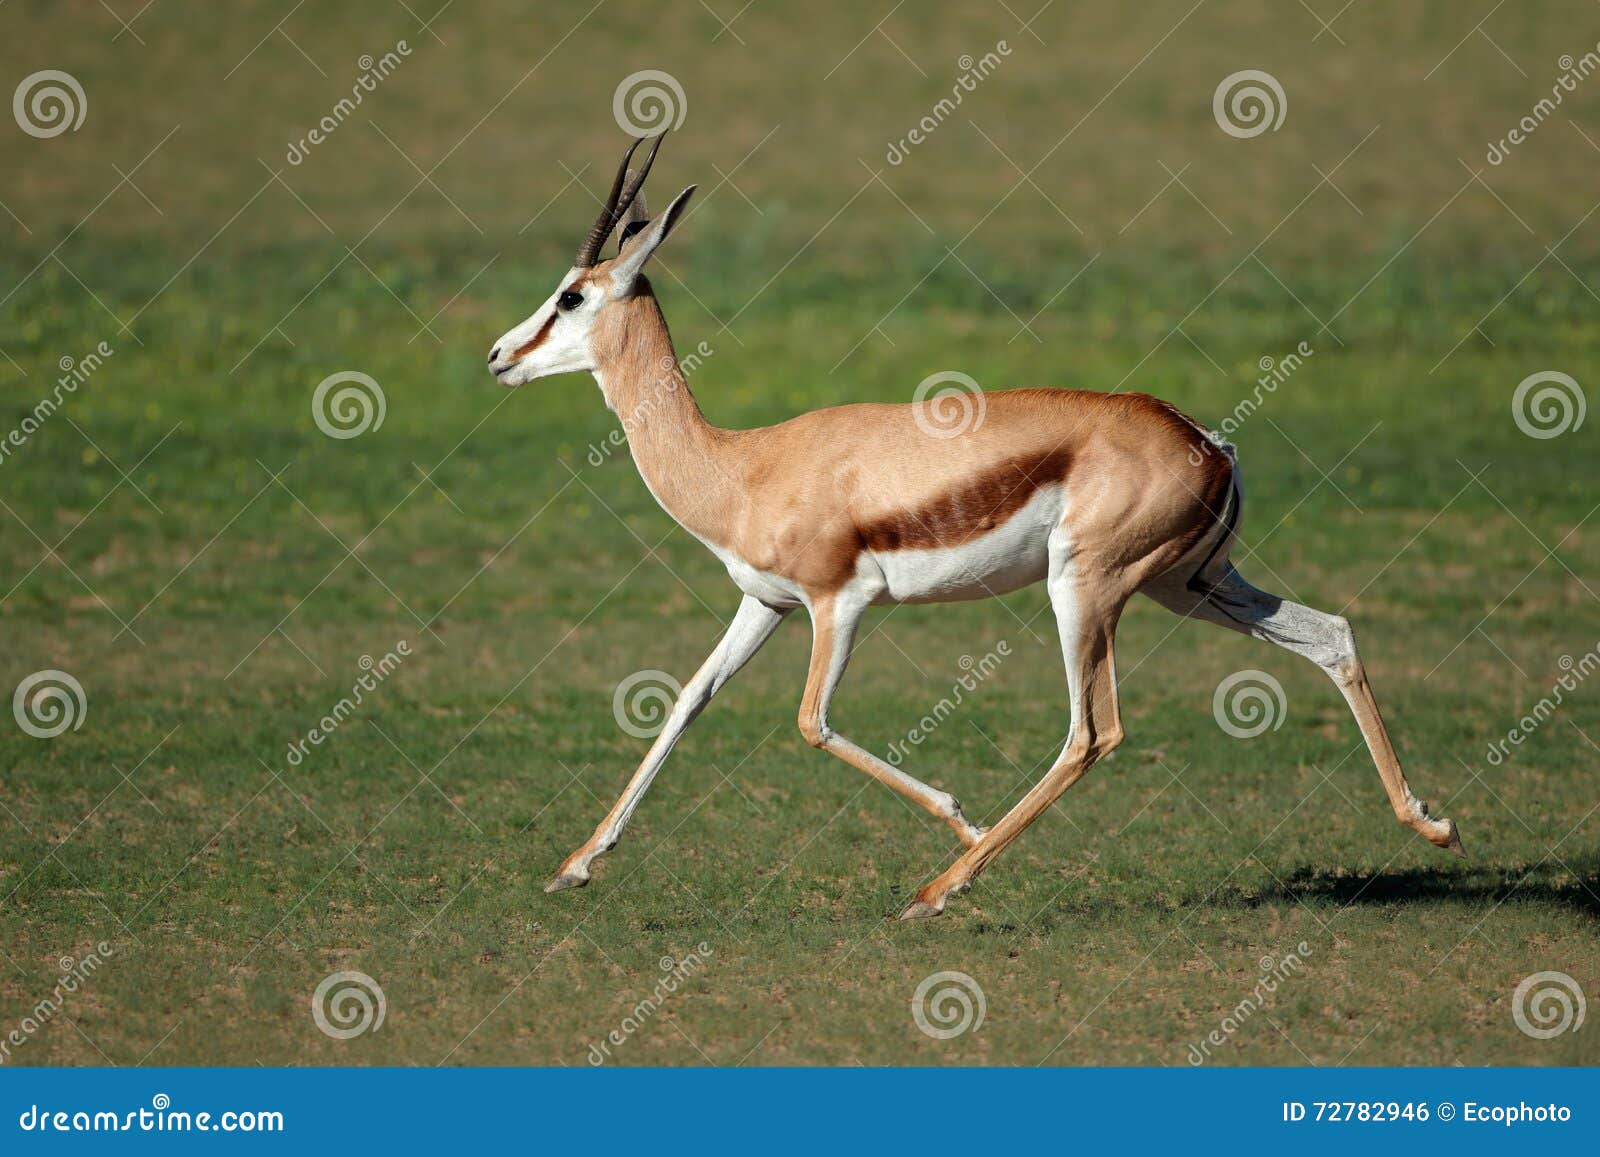 running springbok antelope